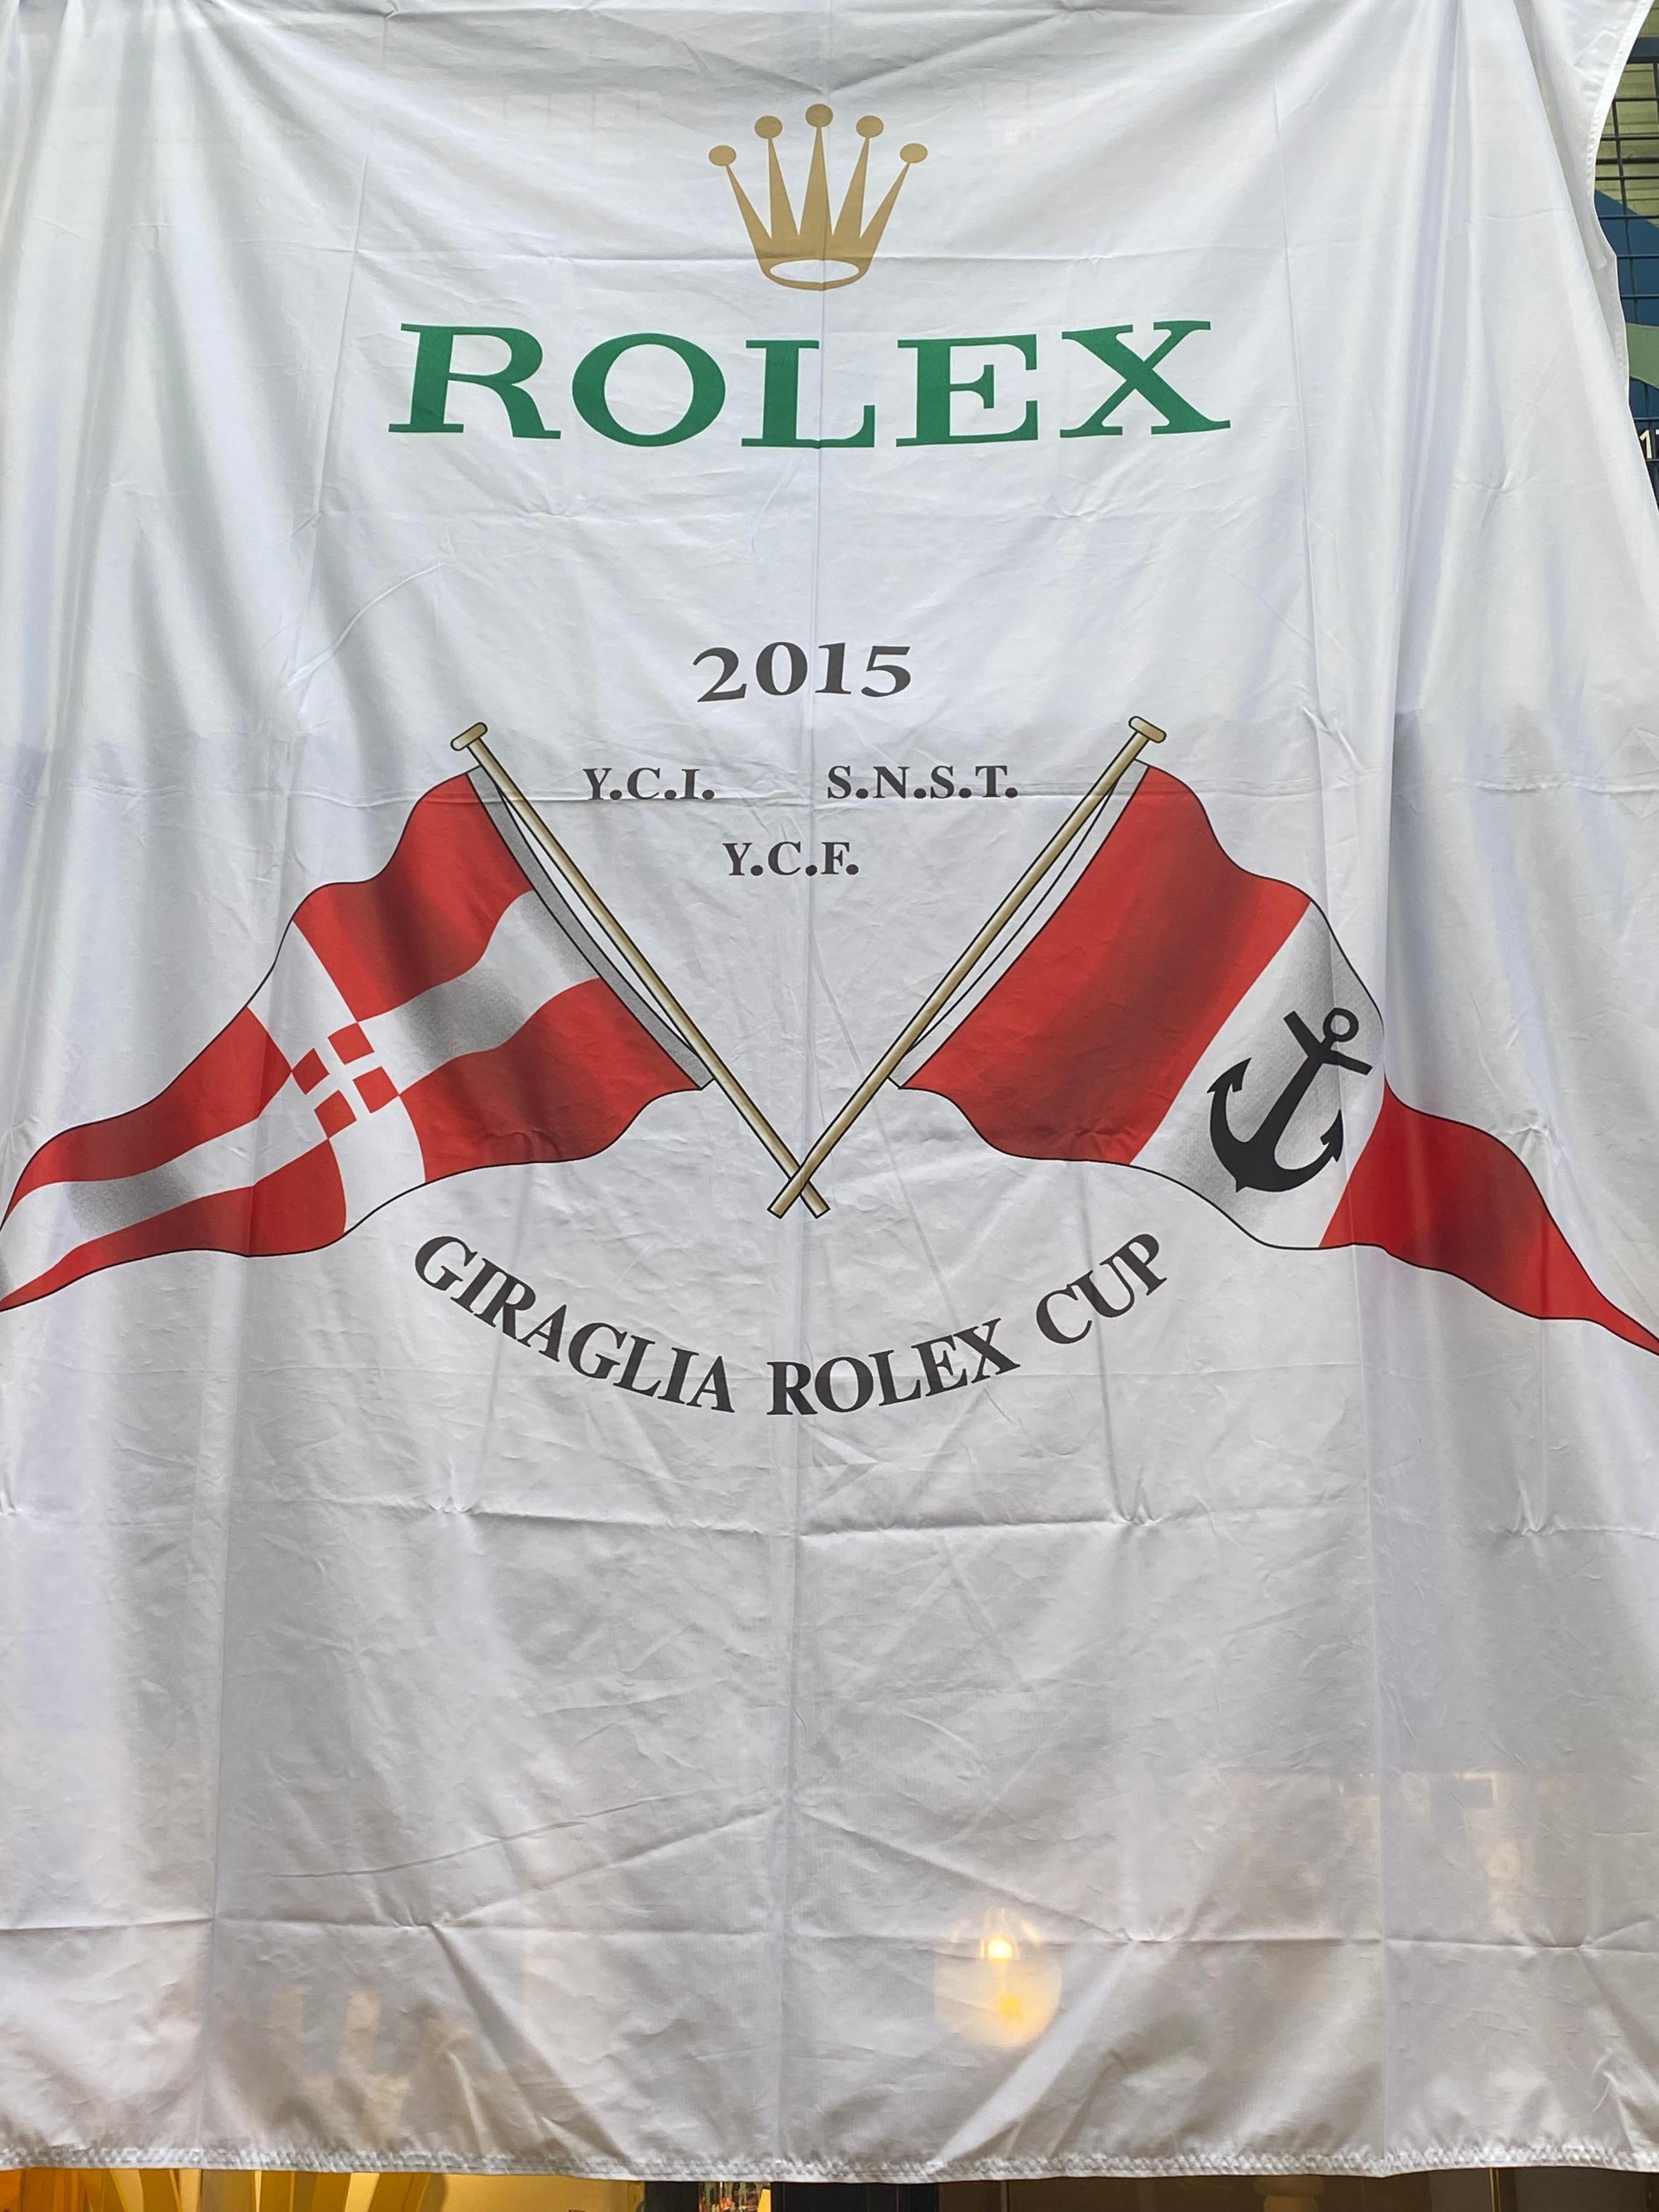 rolex flag